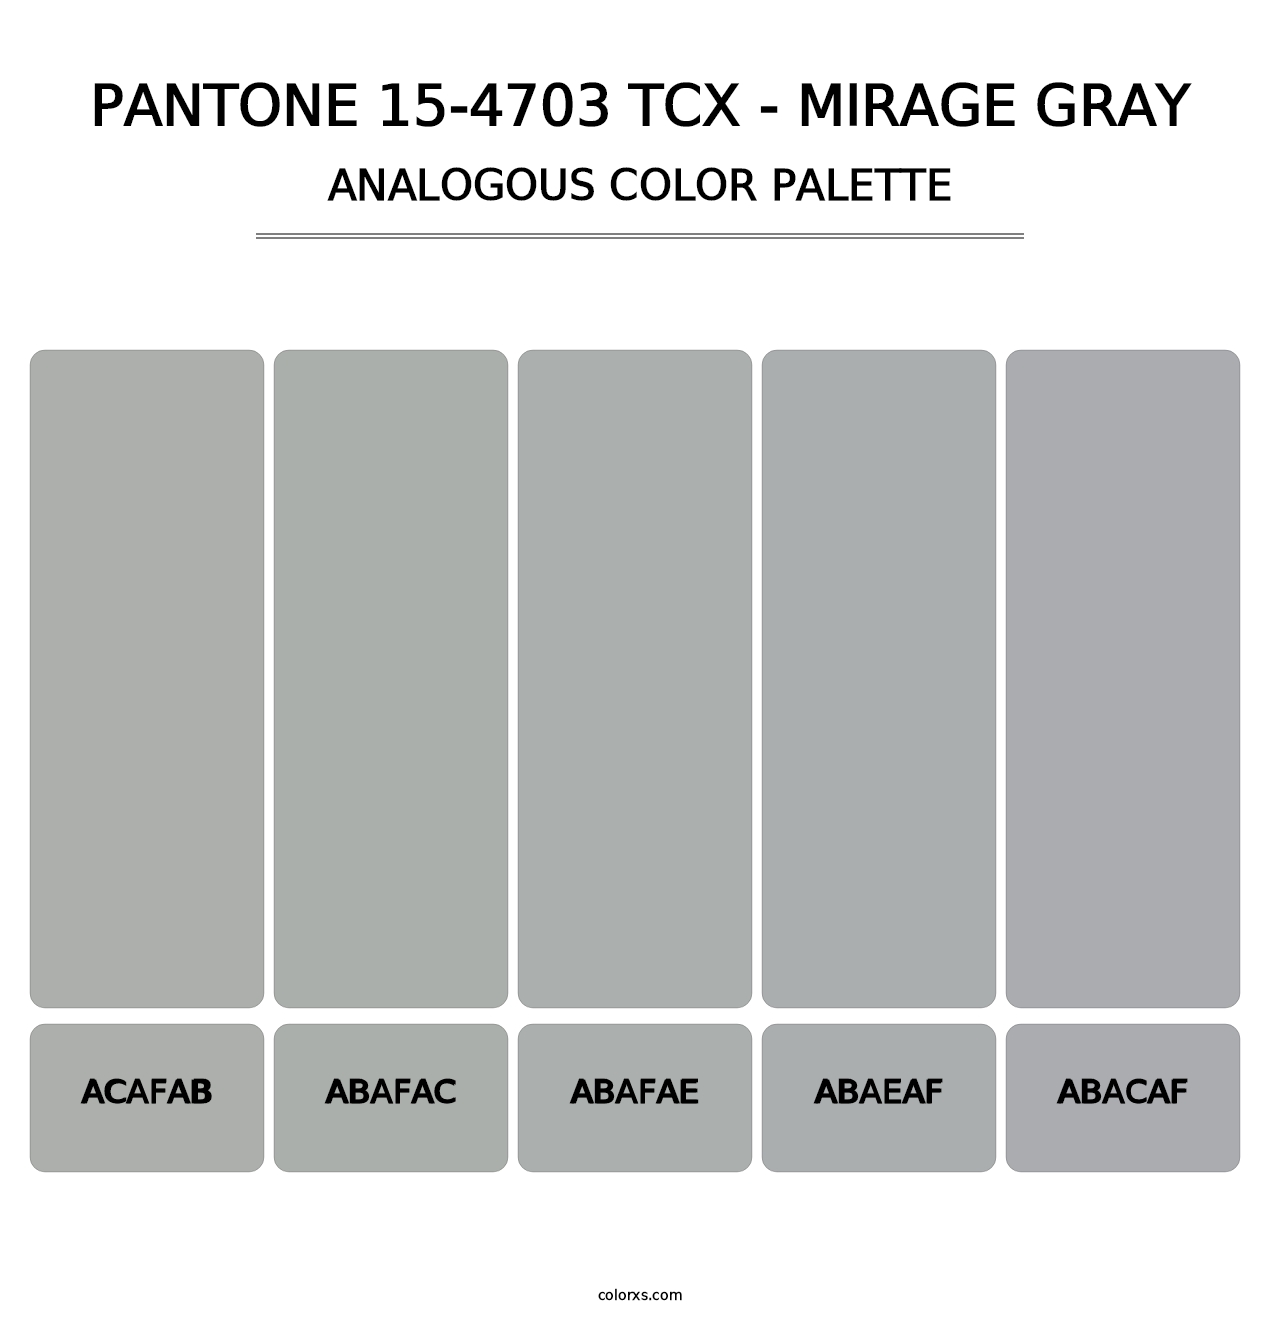 PANTONE 15-4703 TCX - Mirage Gray - Analogous Color Palette